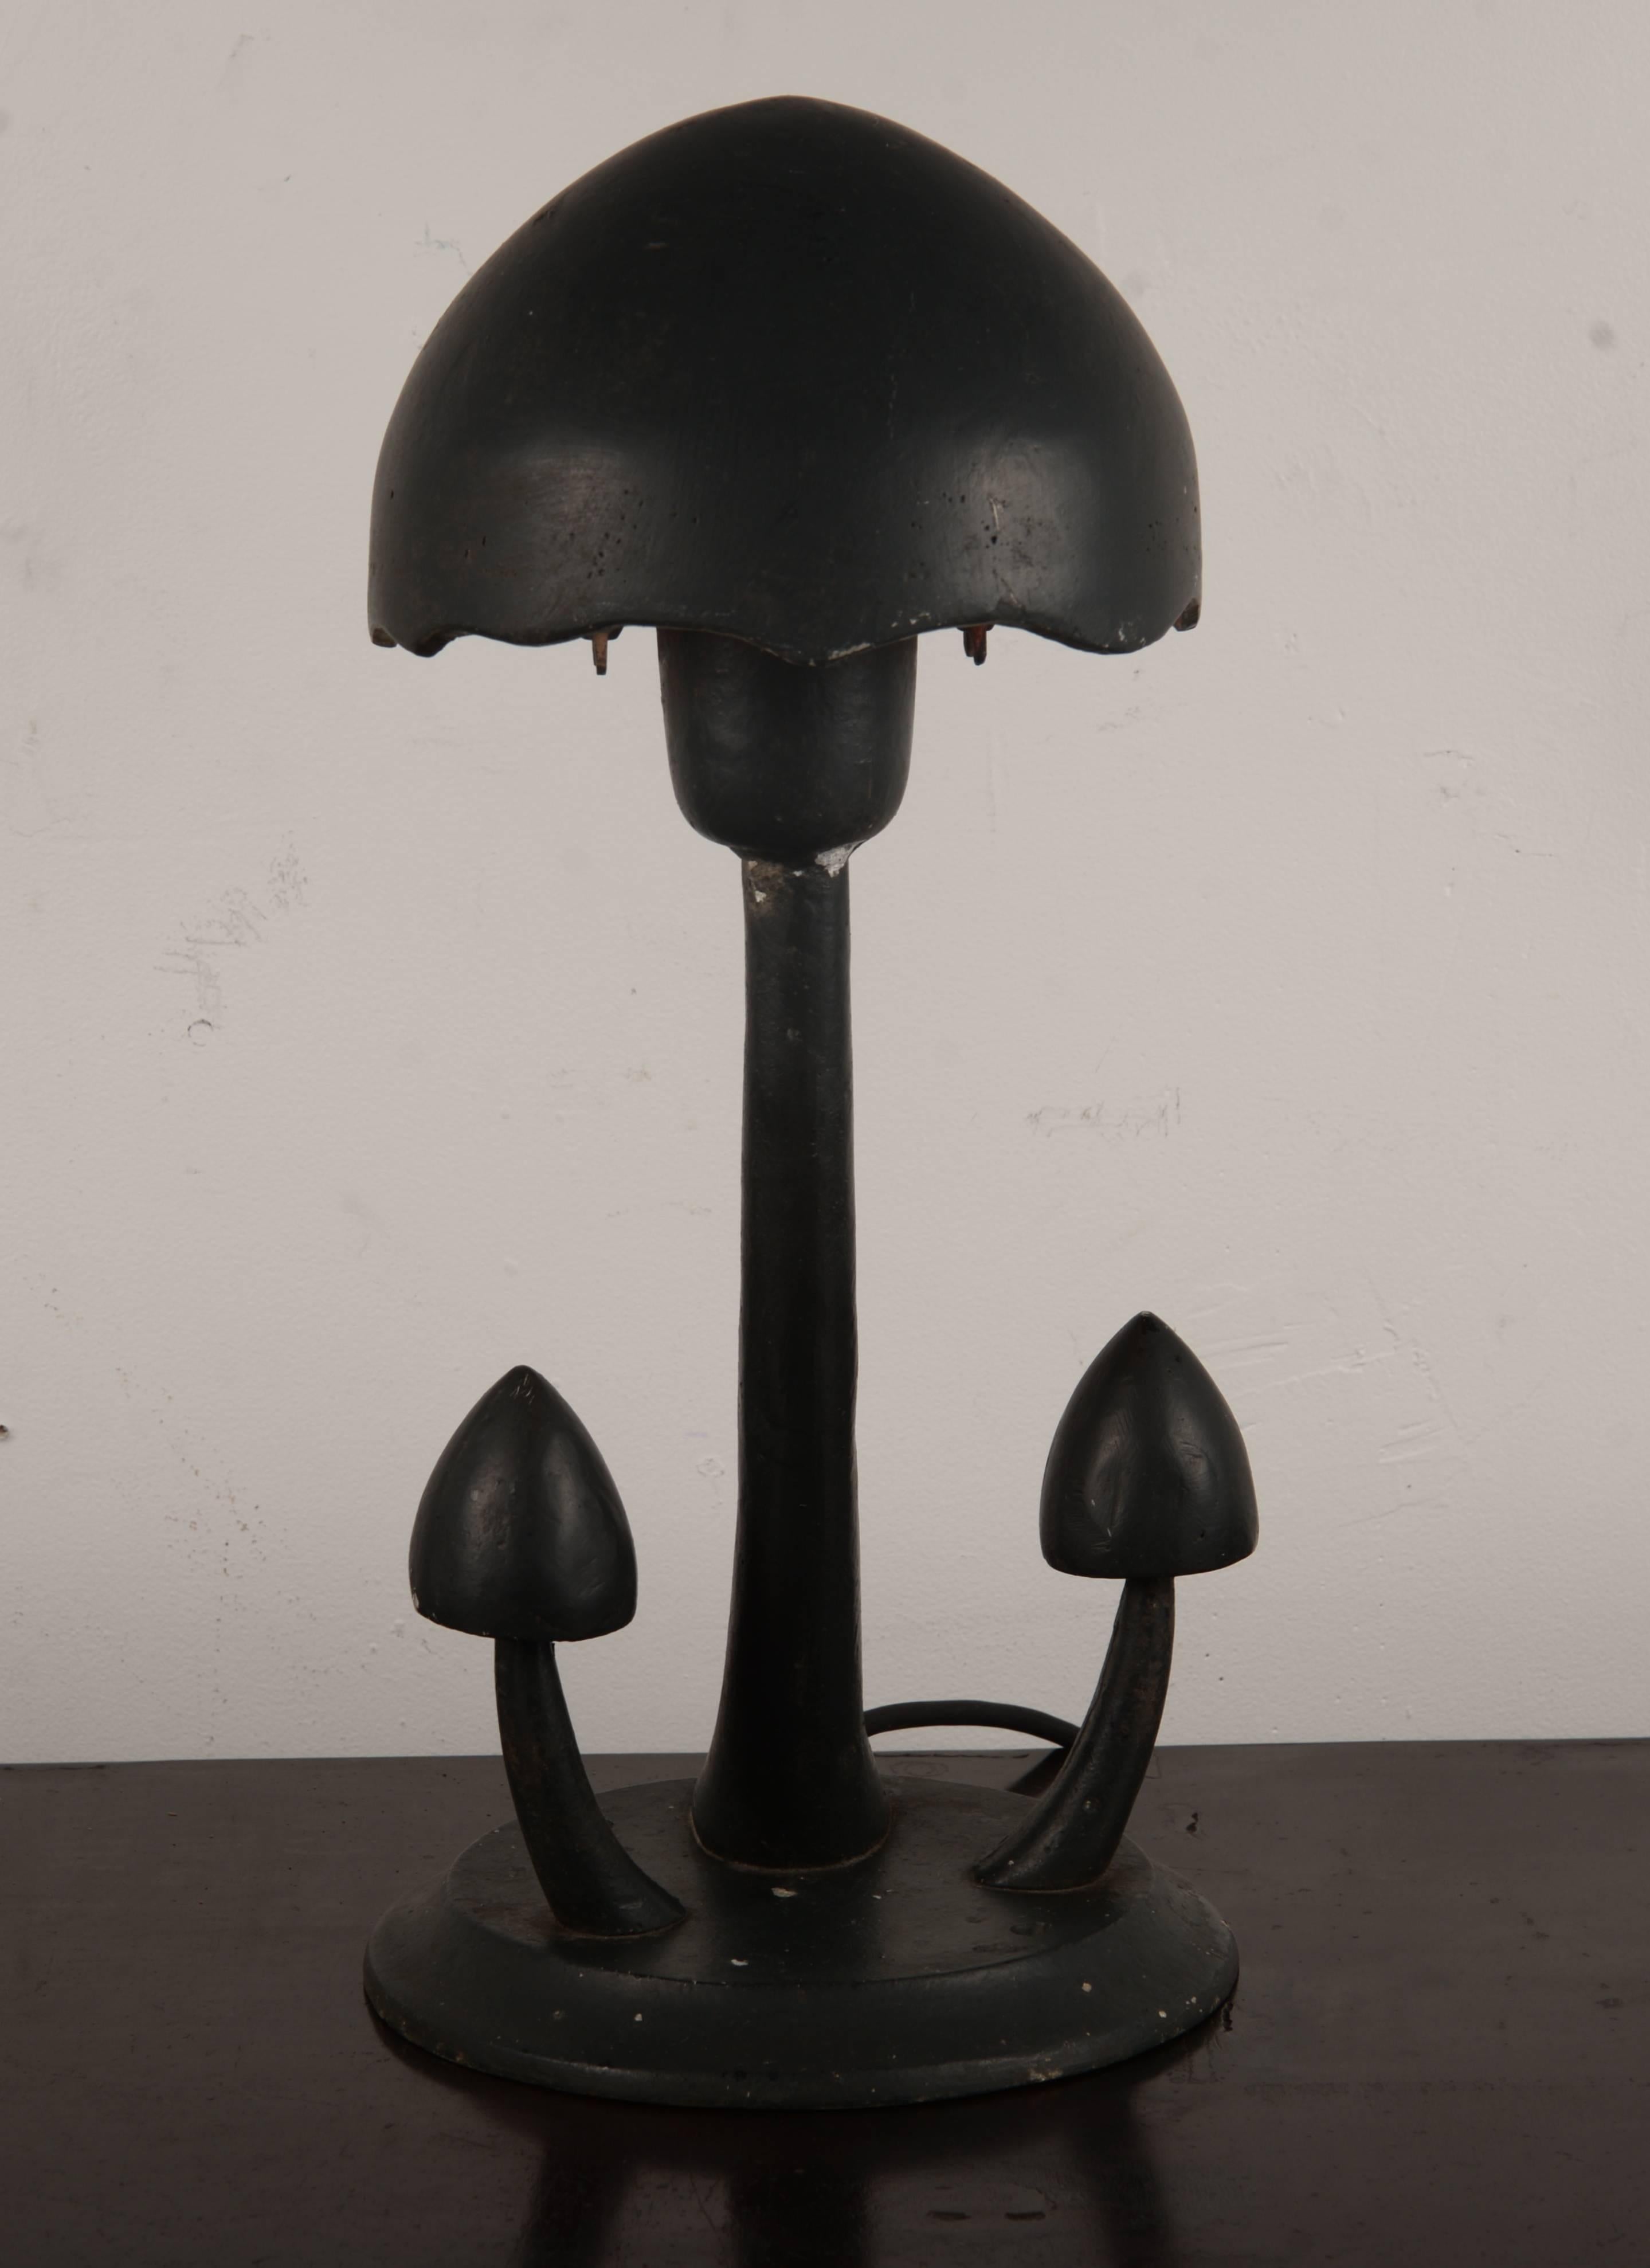 Black painted cast aluminum mushroom lamp. These were originally designed to be outdoor lighting.